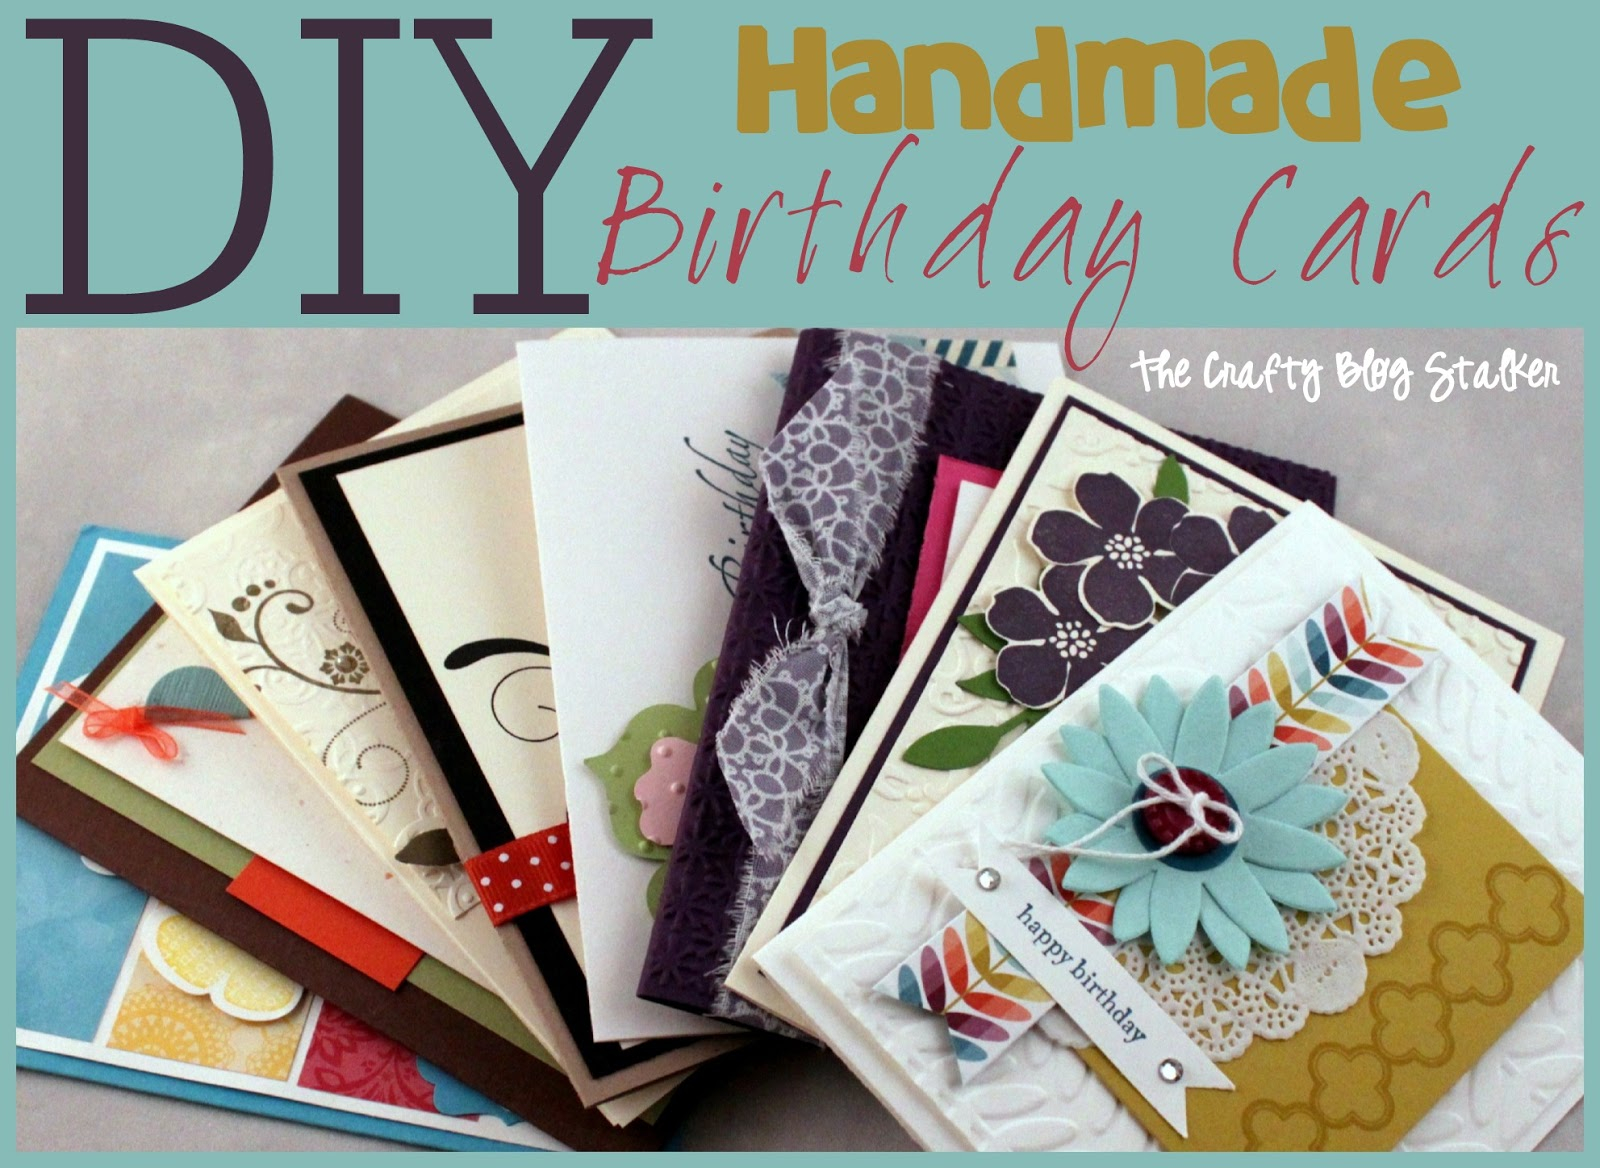 Greeting Cards Ideas For Birthday Handmade Birthday Card Ideas The Crafty Blog Stalker